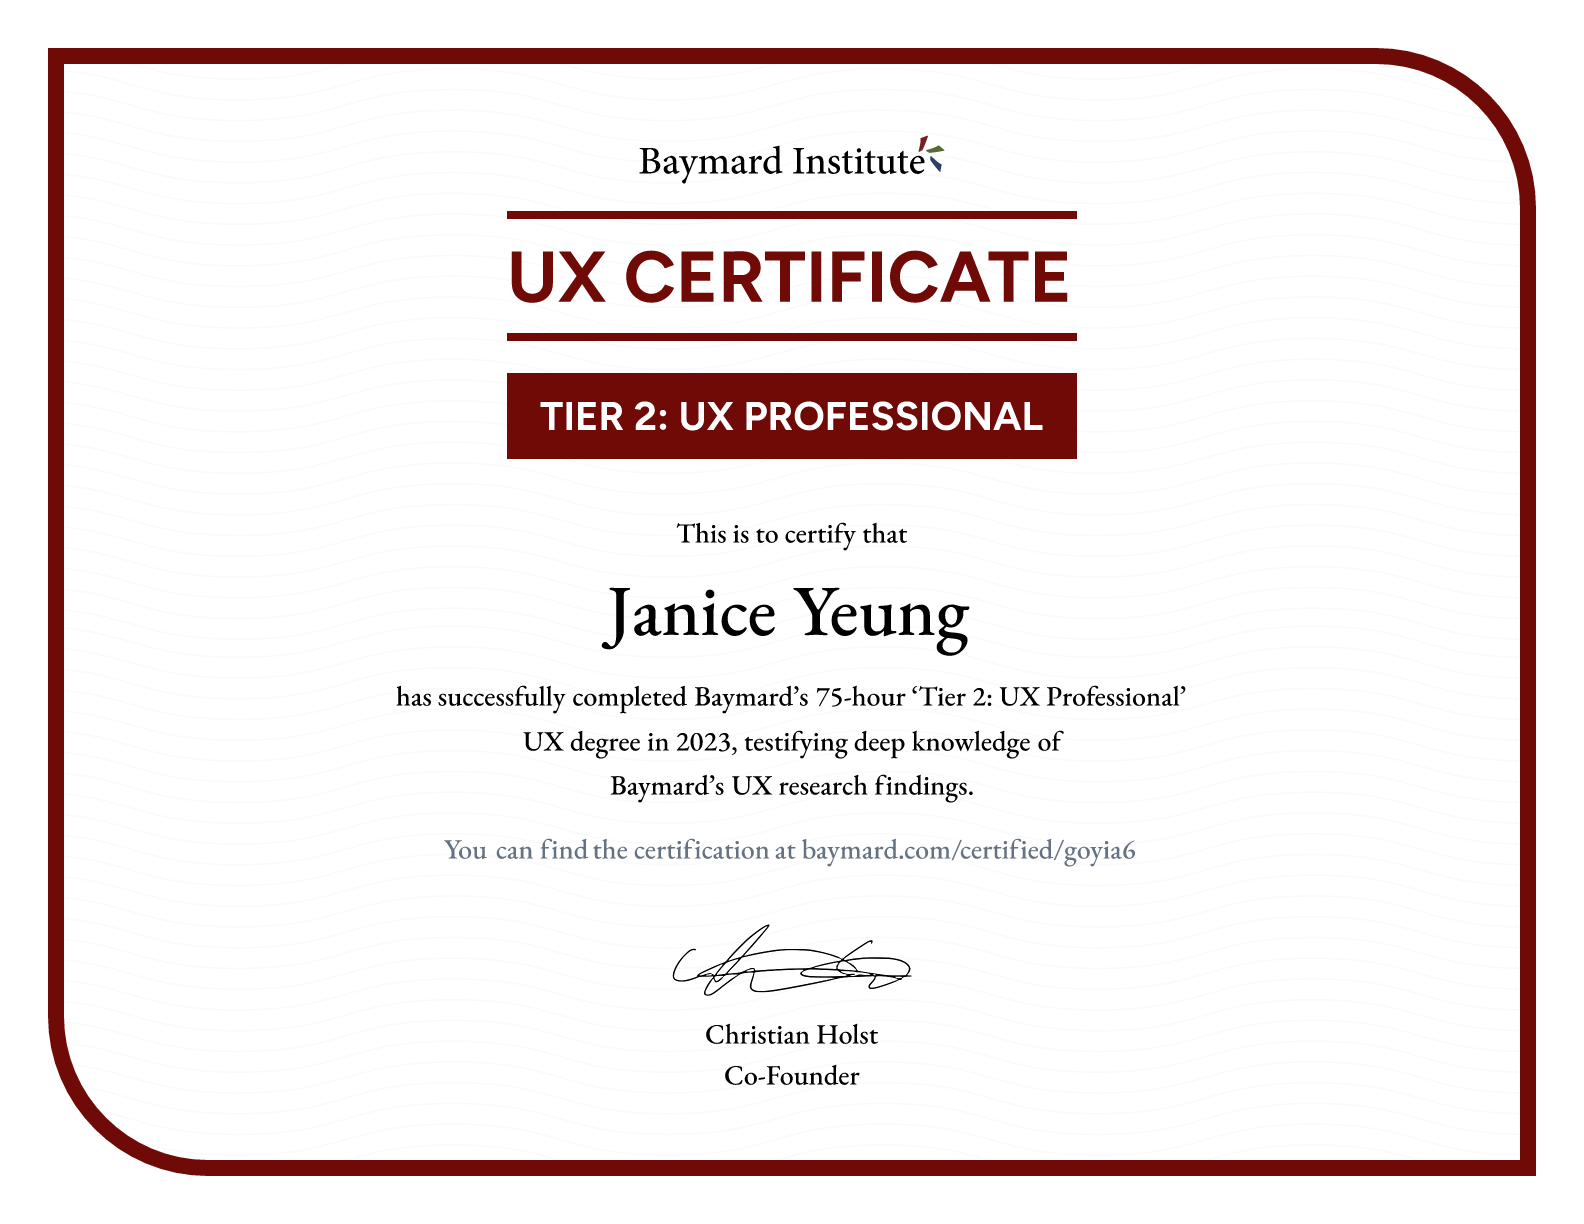 Janice Yeung’s certificate